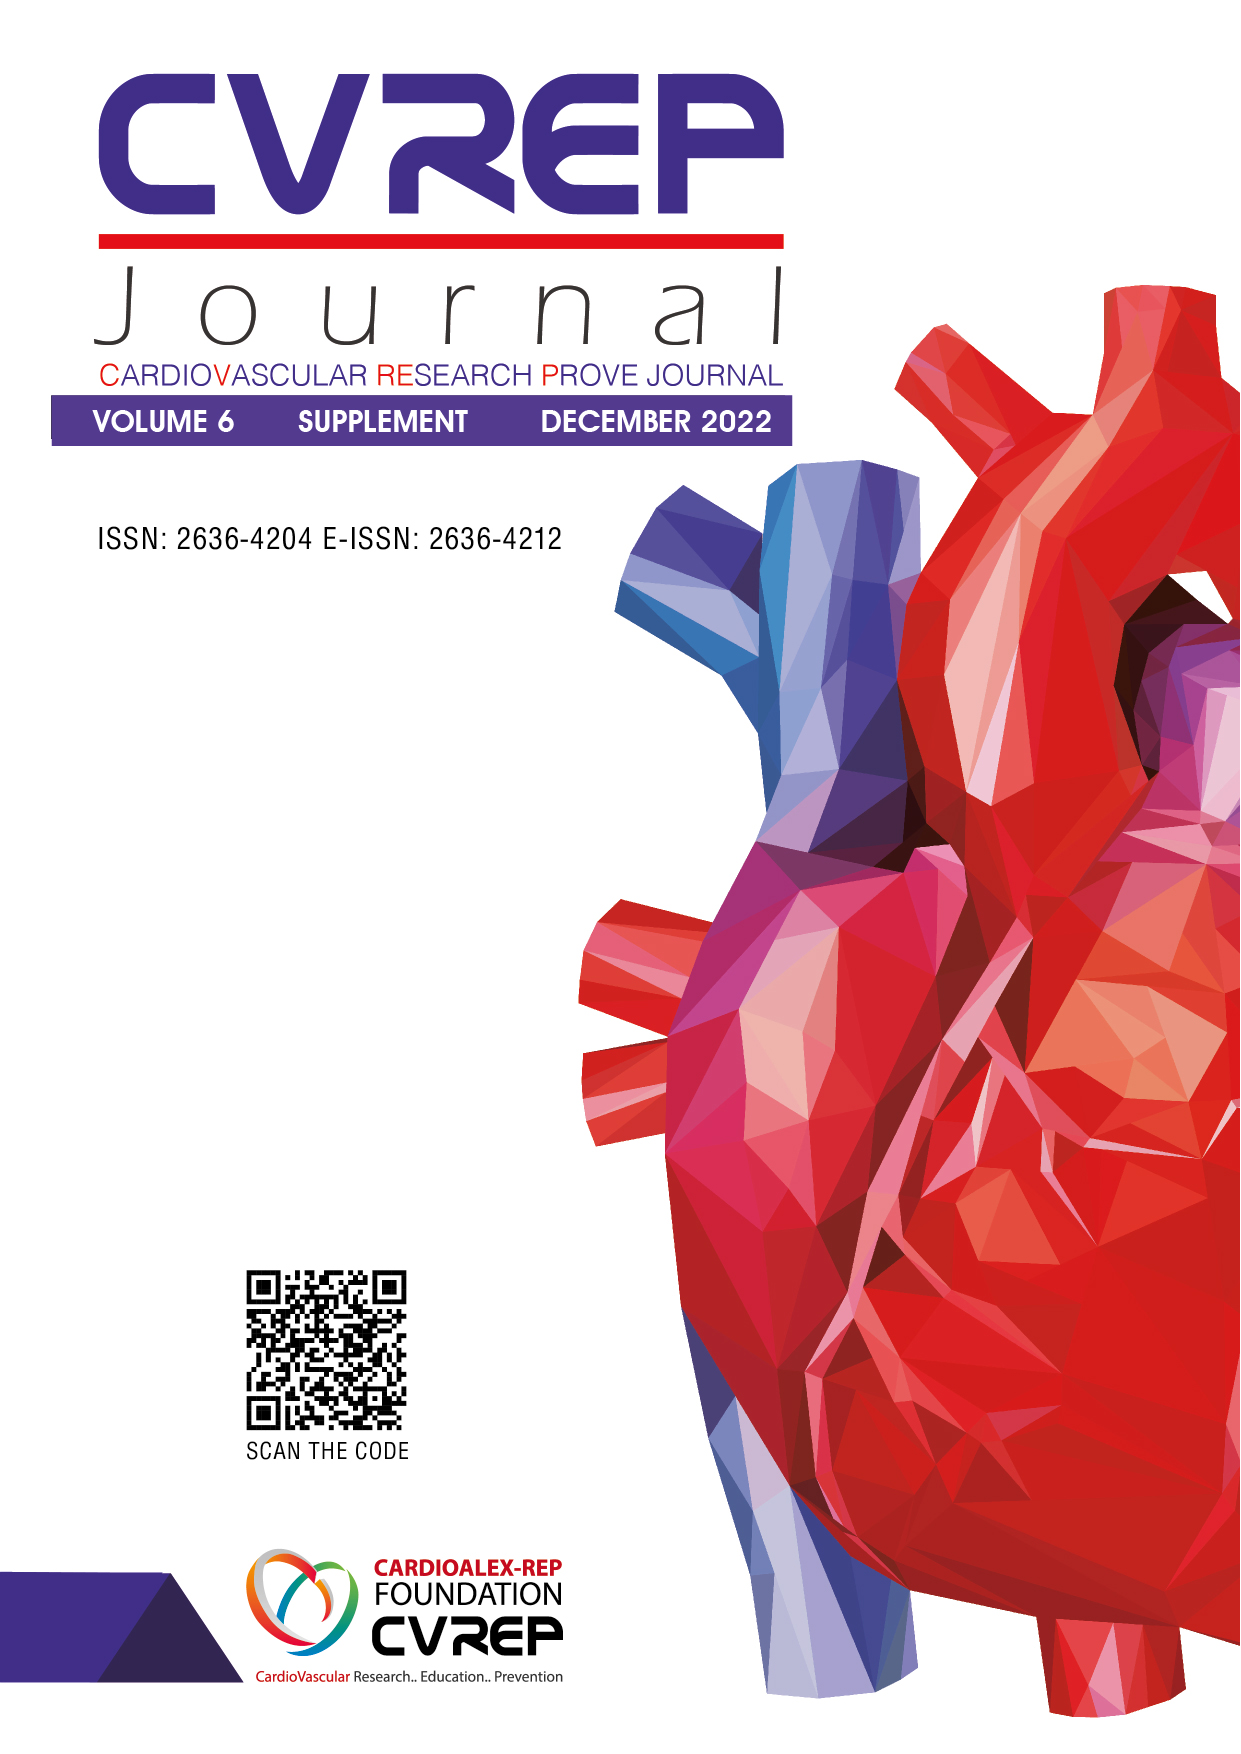 Cardiovascular Research Prove Journal